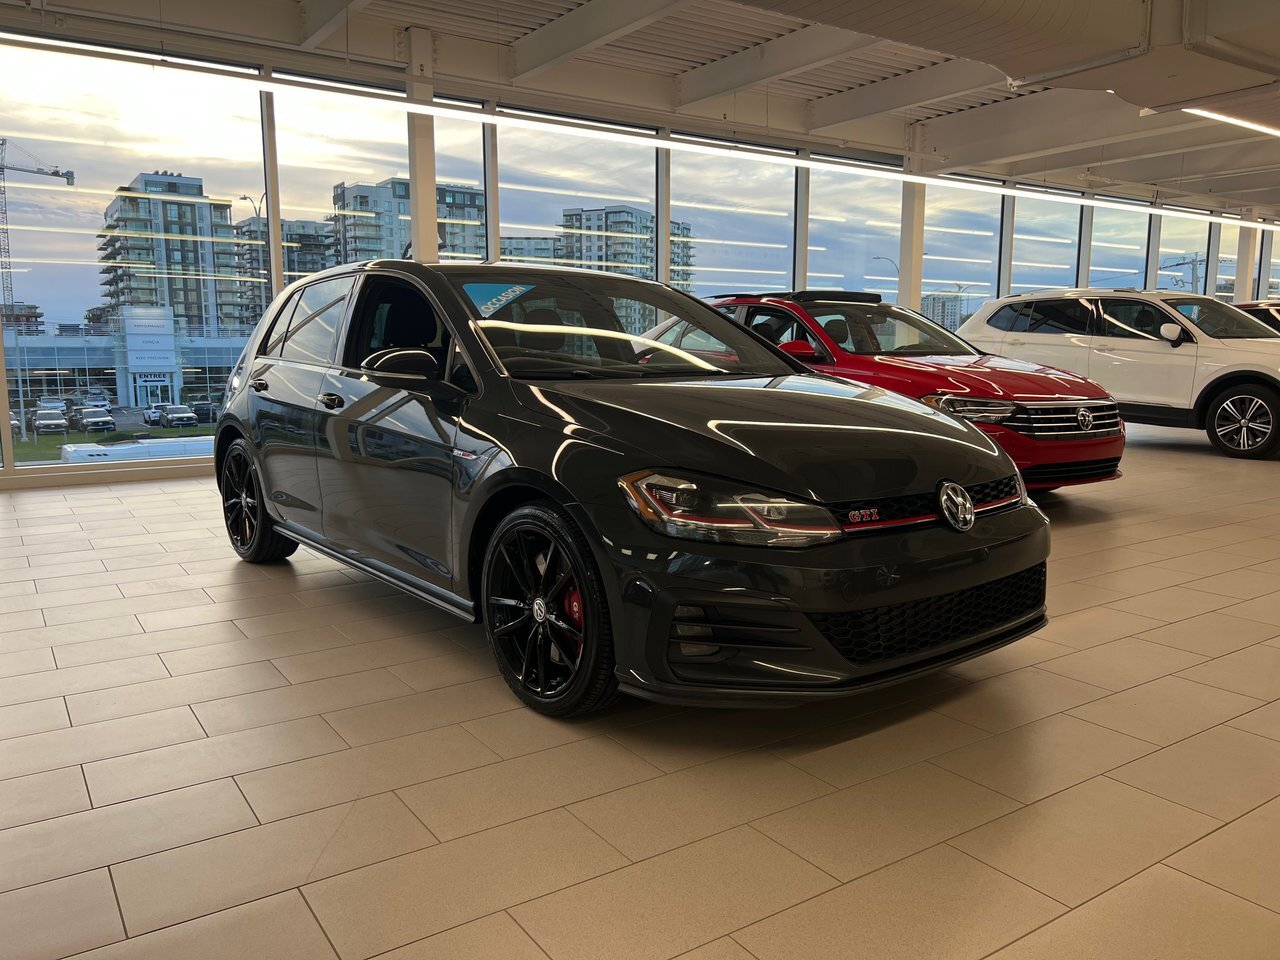 2019 Volkswagen GTI RABBIT RABBIT EDITION / RABBIT EDITION